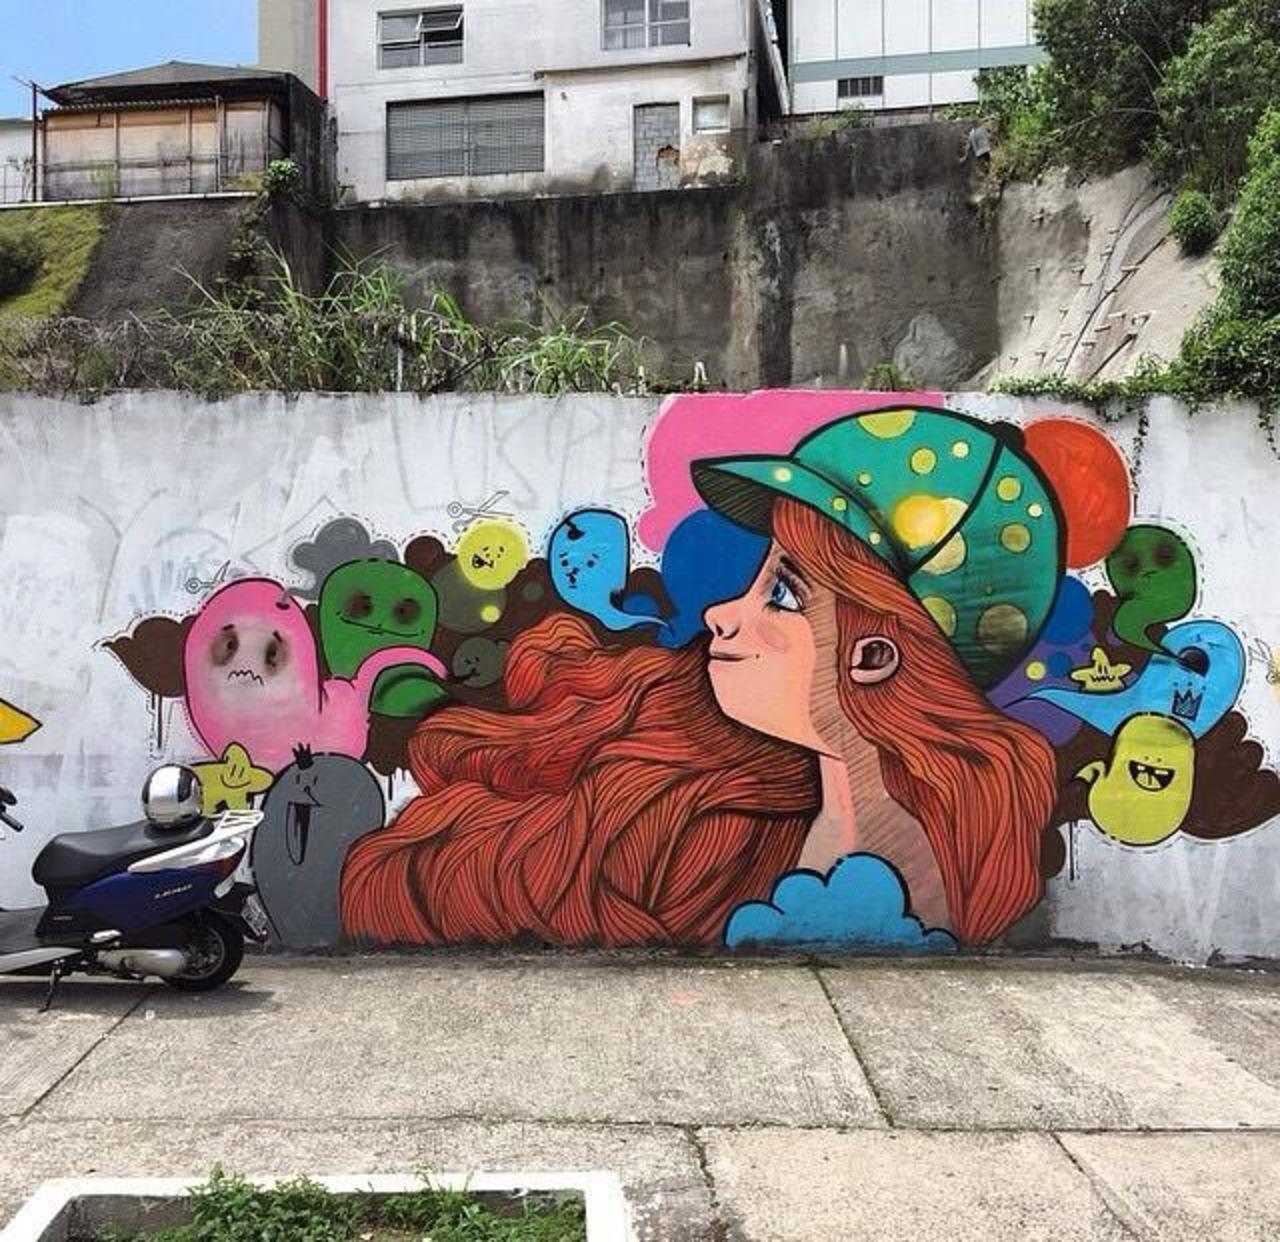 Endearing Street Art by Vupulos in São Paulo, Brazil 

#art #mural #graffiti #streetart http://t.co/Mzqe0ru015